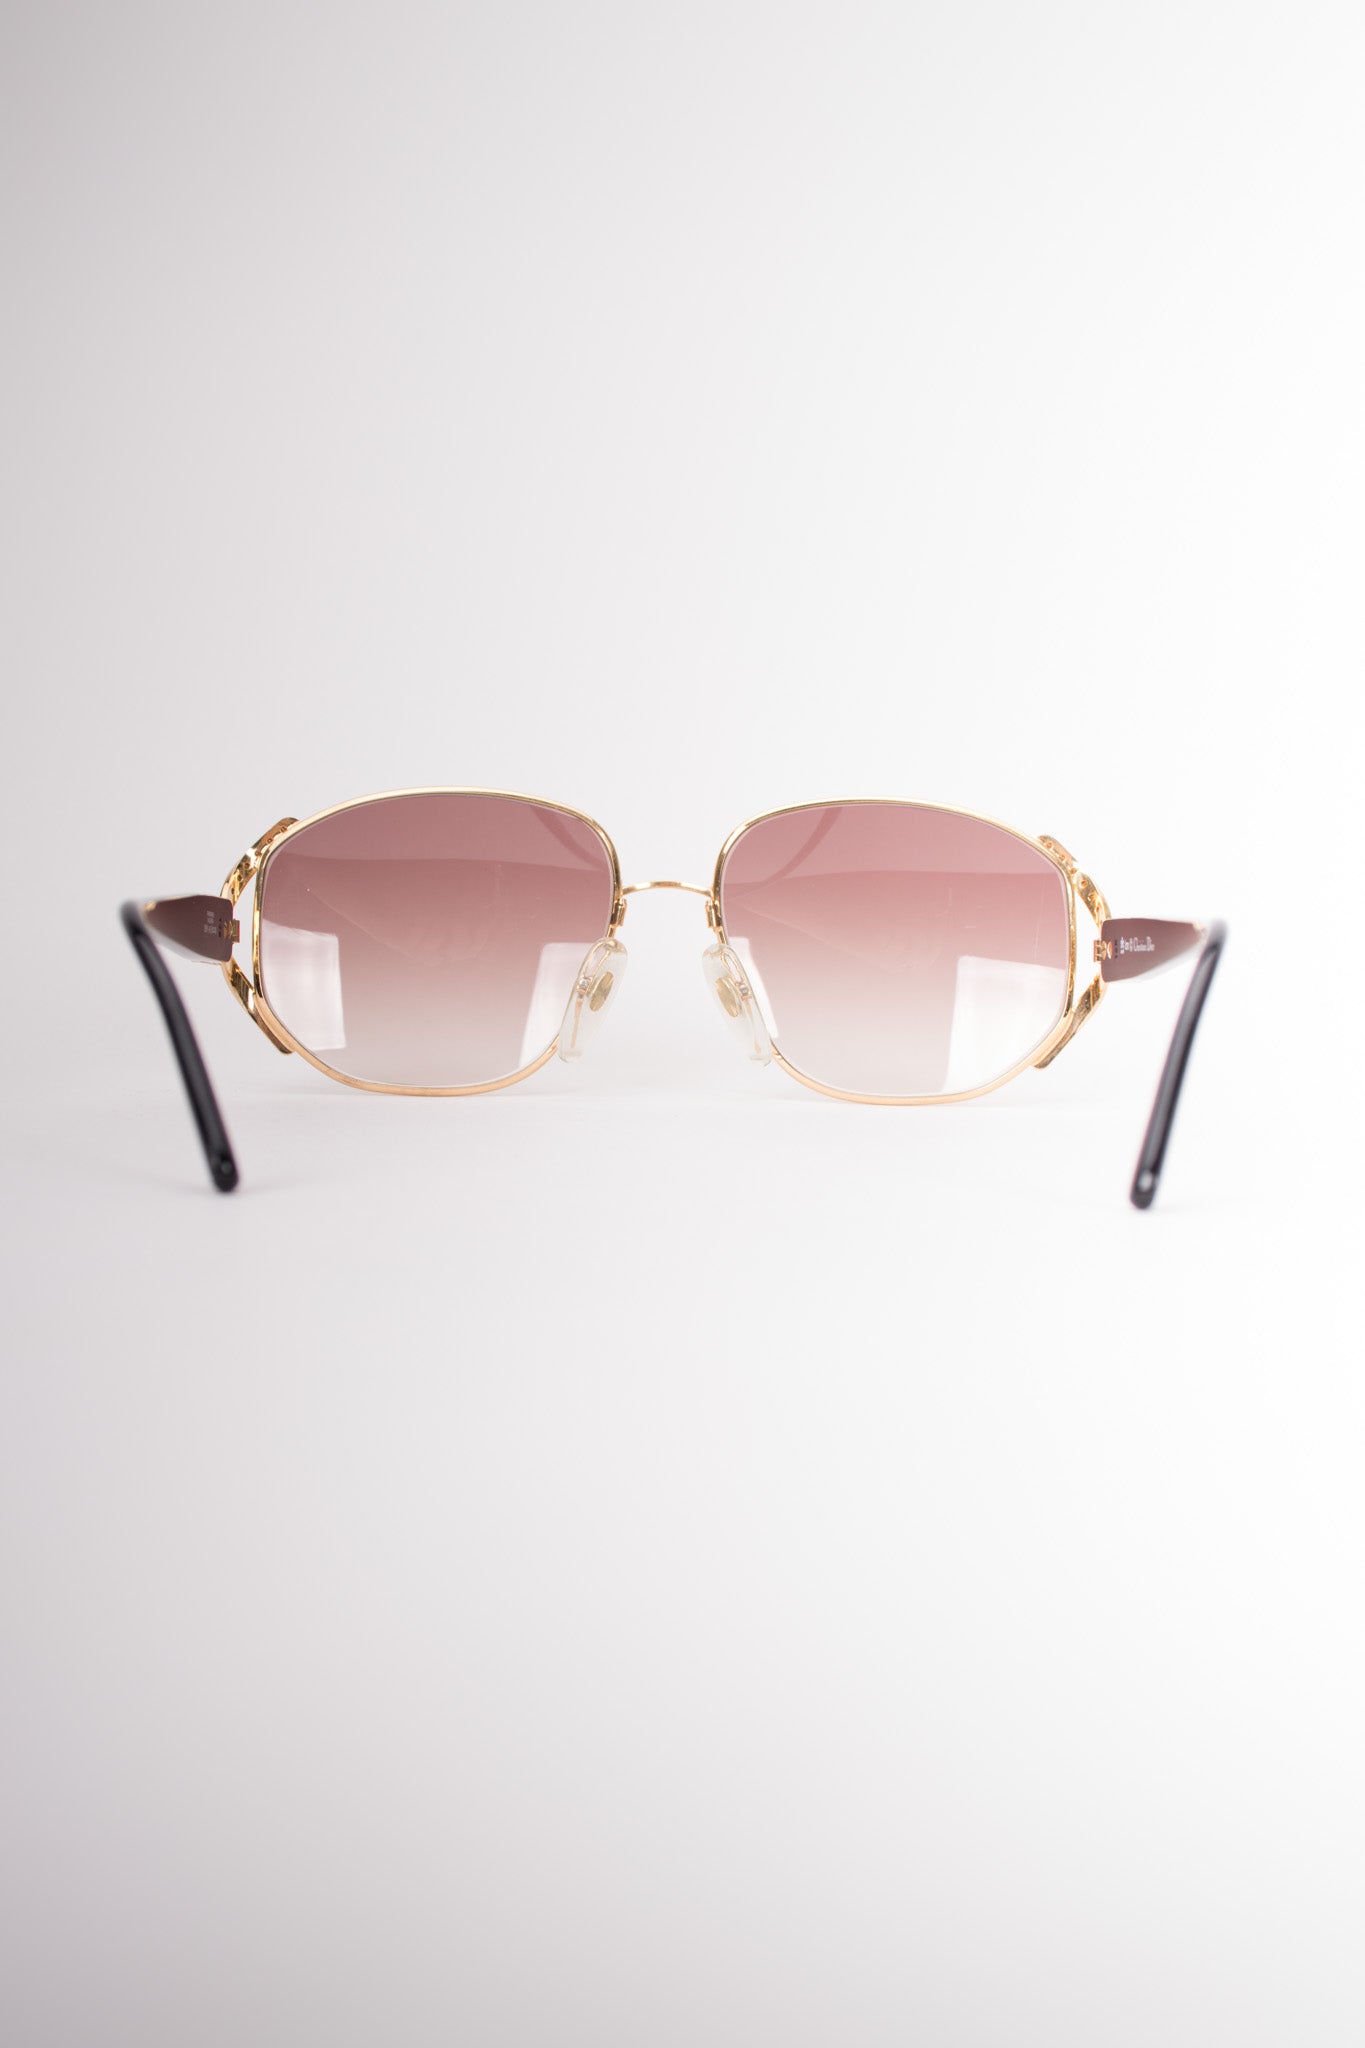 Christian Dior Rhinestone Aviator Pilot Sunglasses 2619 Graduated Amber Lenses